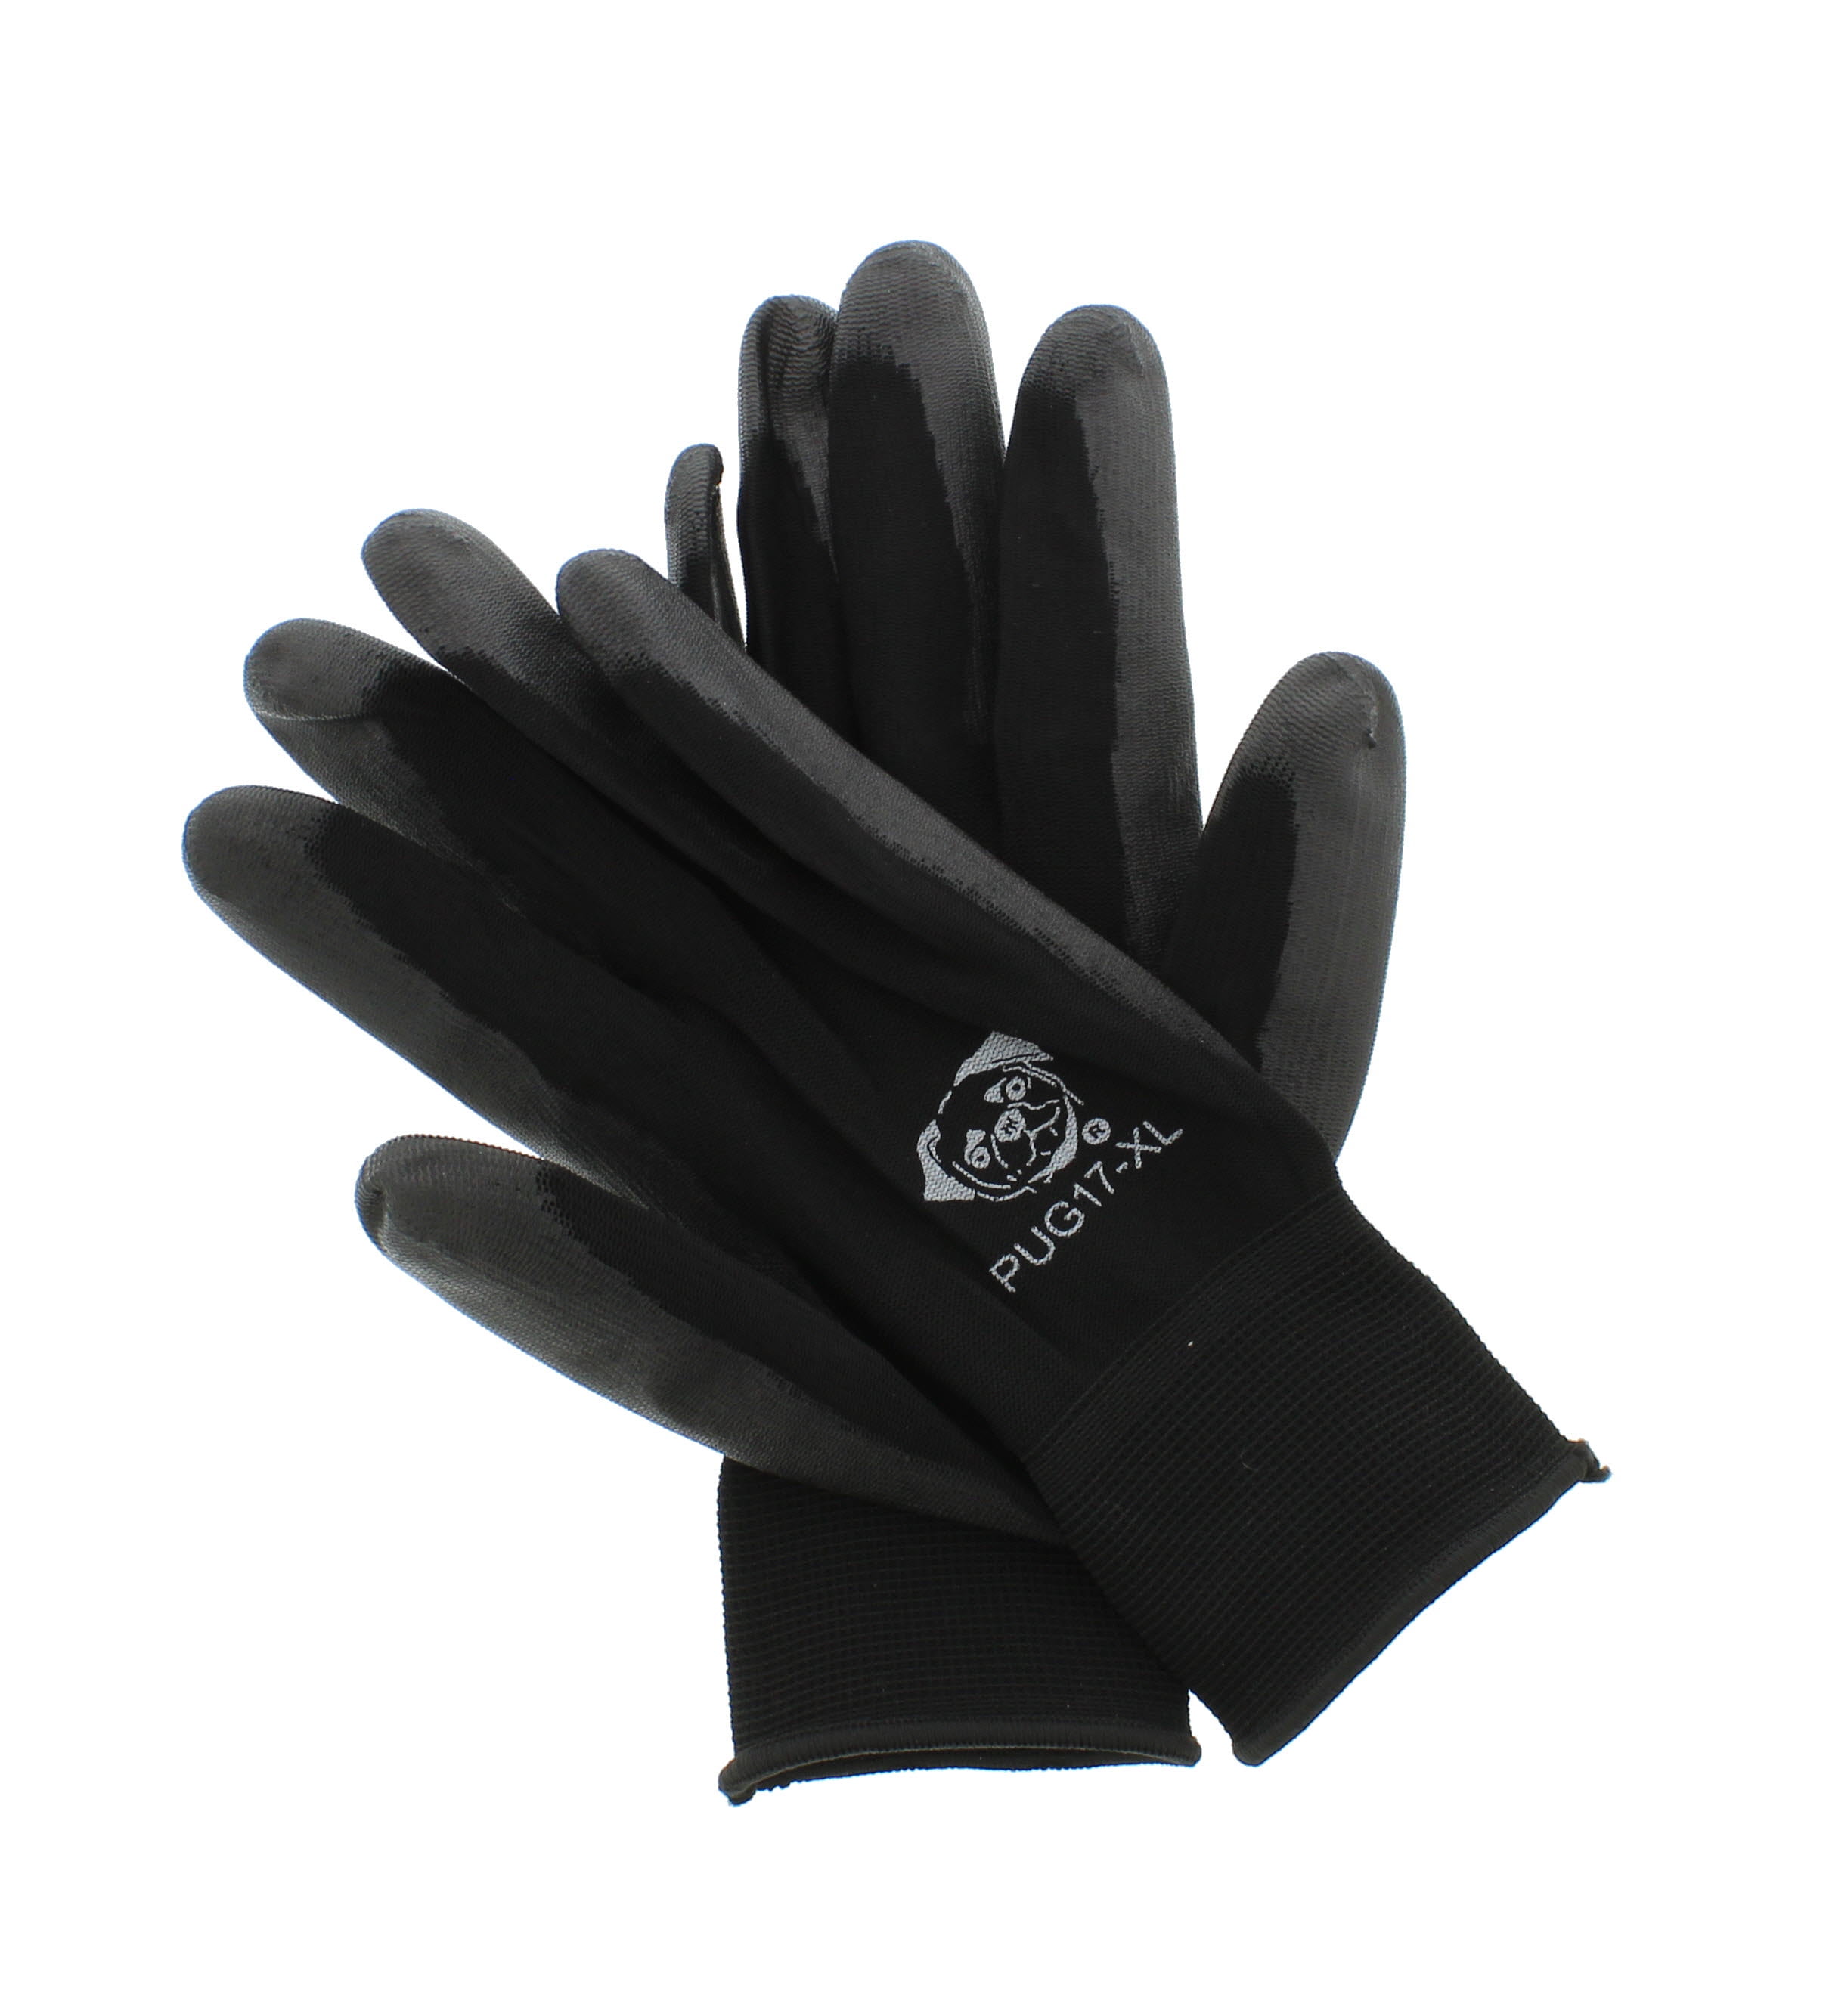 PUG Work Gloves Hi-Vis Lime Ultra-Thin PU Palm Coated Multi-Purpose 12 Pairs